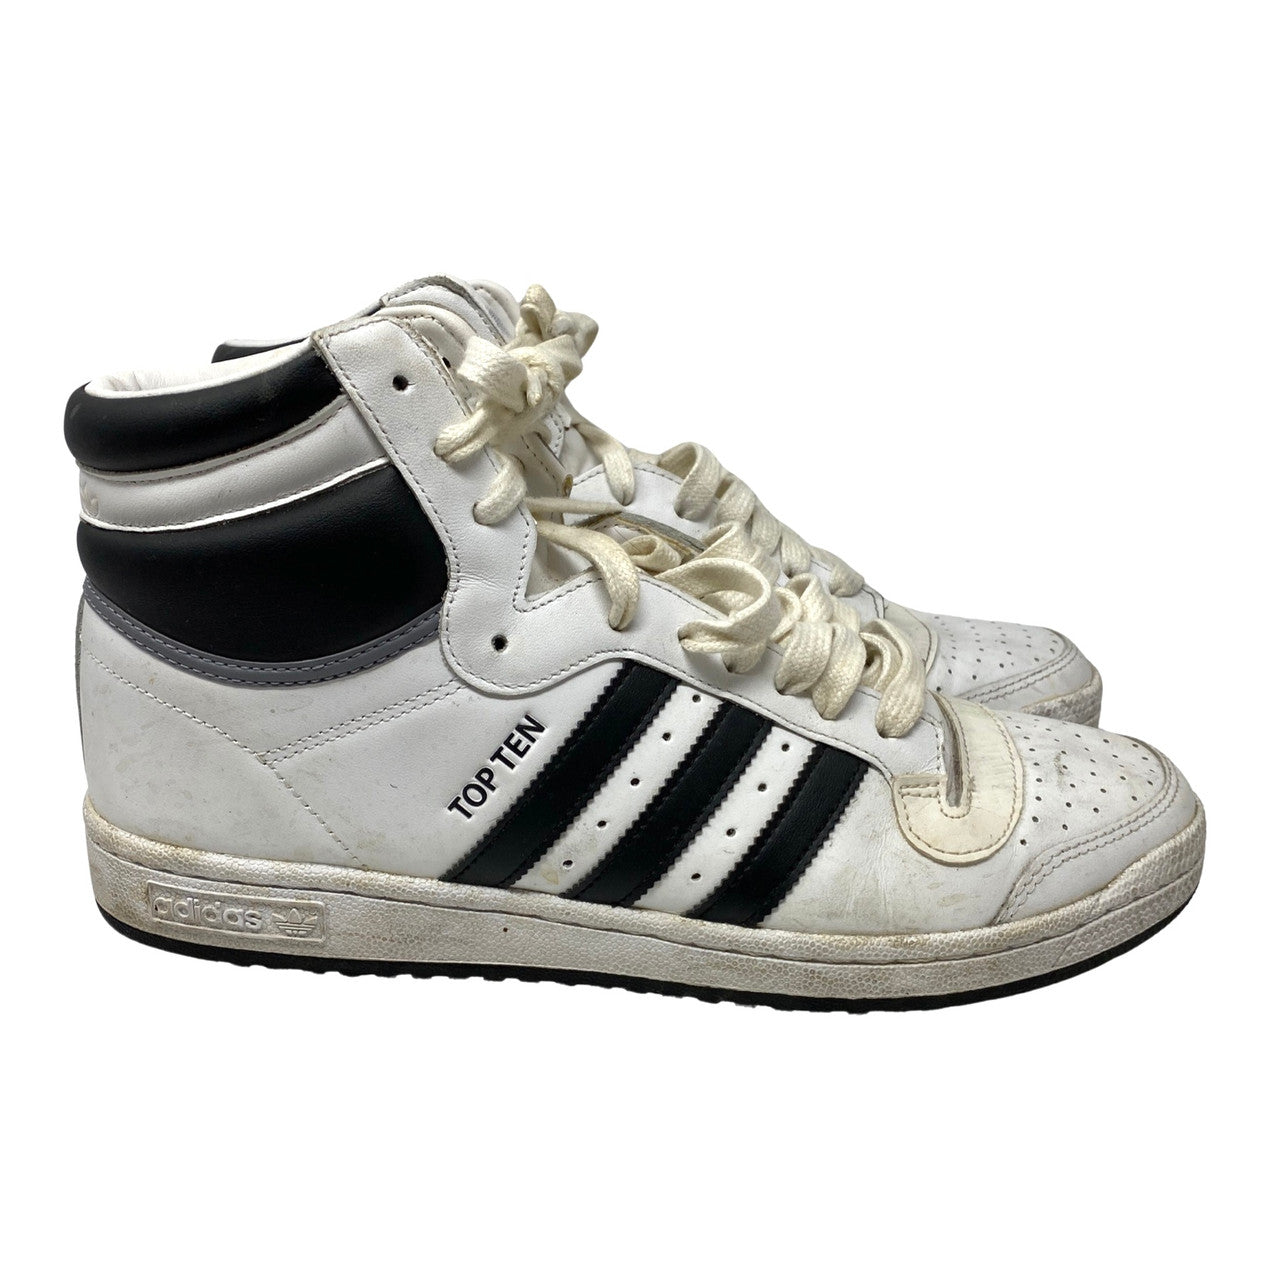 Vintage Adidas Top Ten High Top Sneakers-Thumbnail